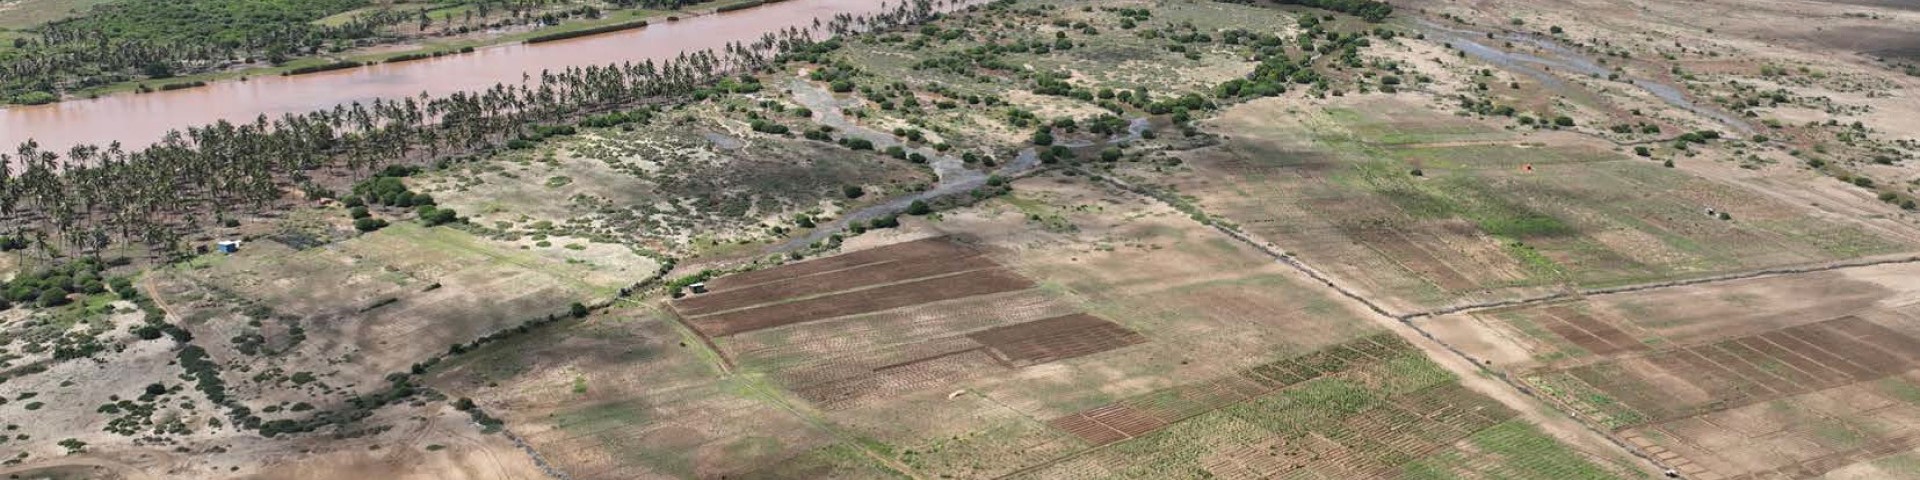 View of cropland on the Juba River in Gobweyn